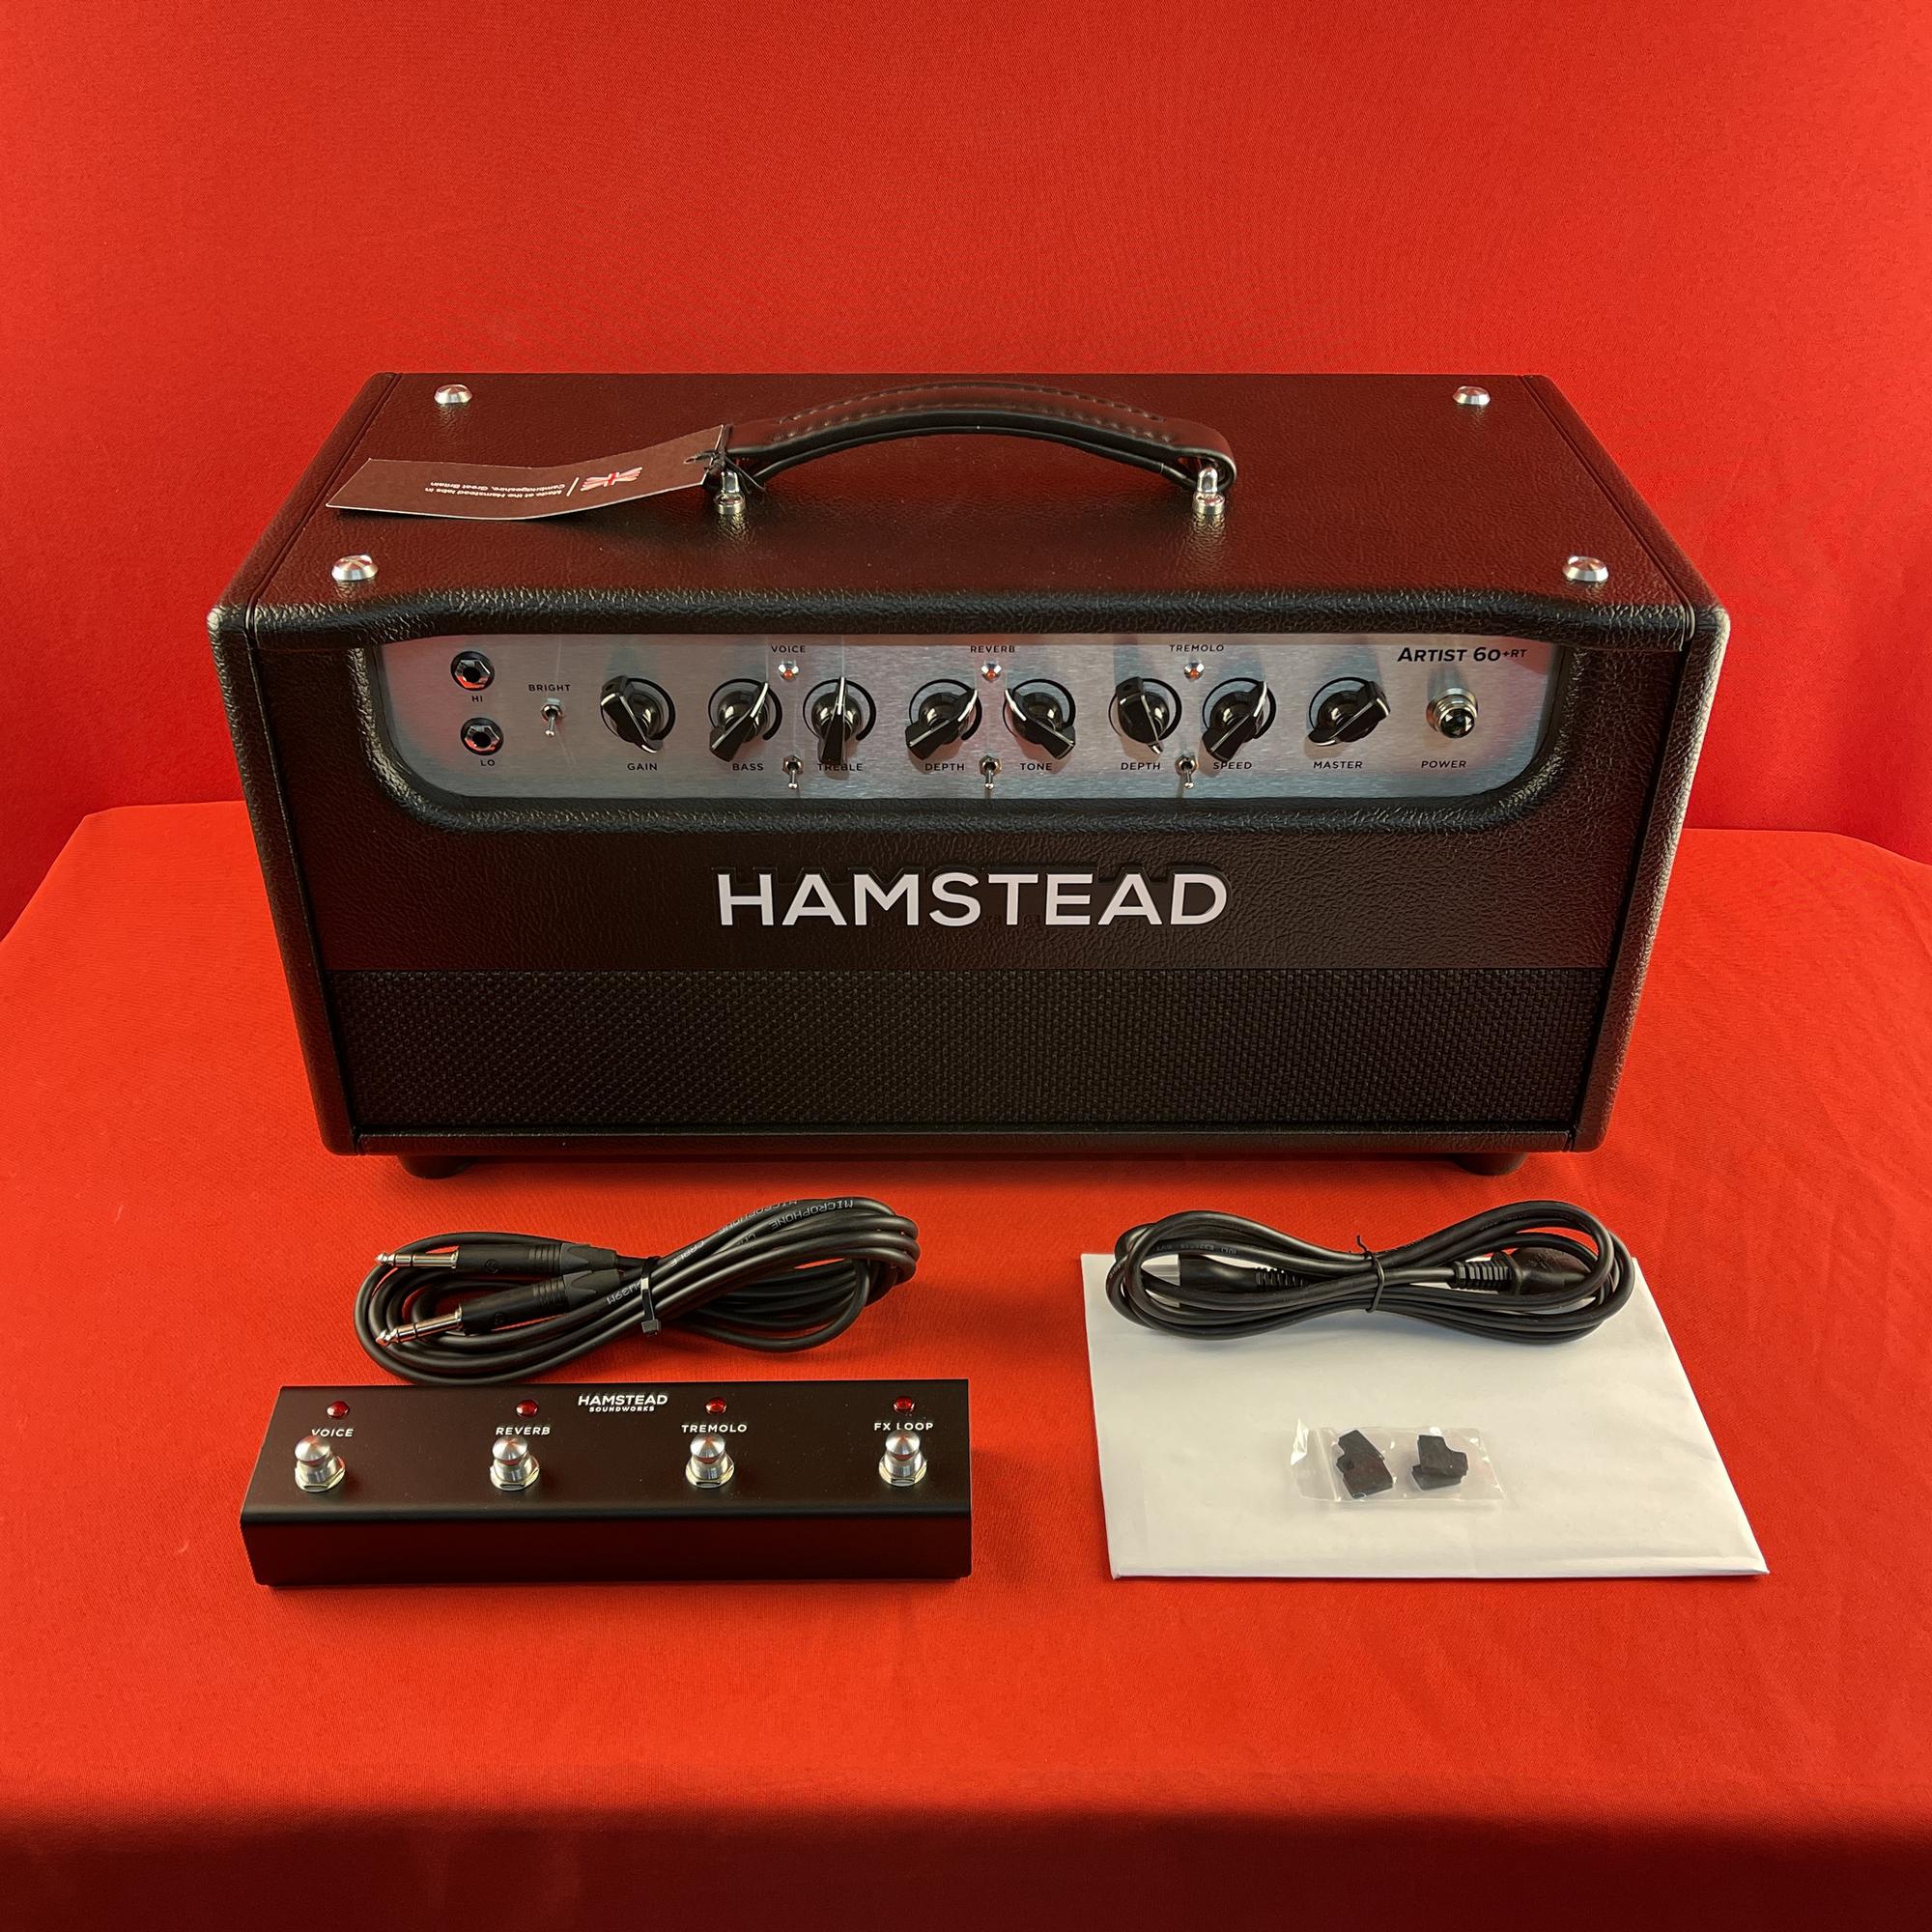 [USED] Hamstead Soundworks Artist 60+RT Guitar Amplifier Head, Black